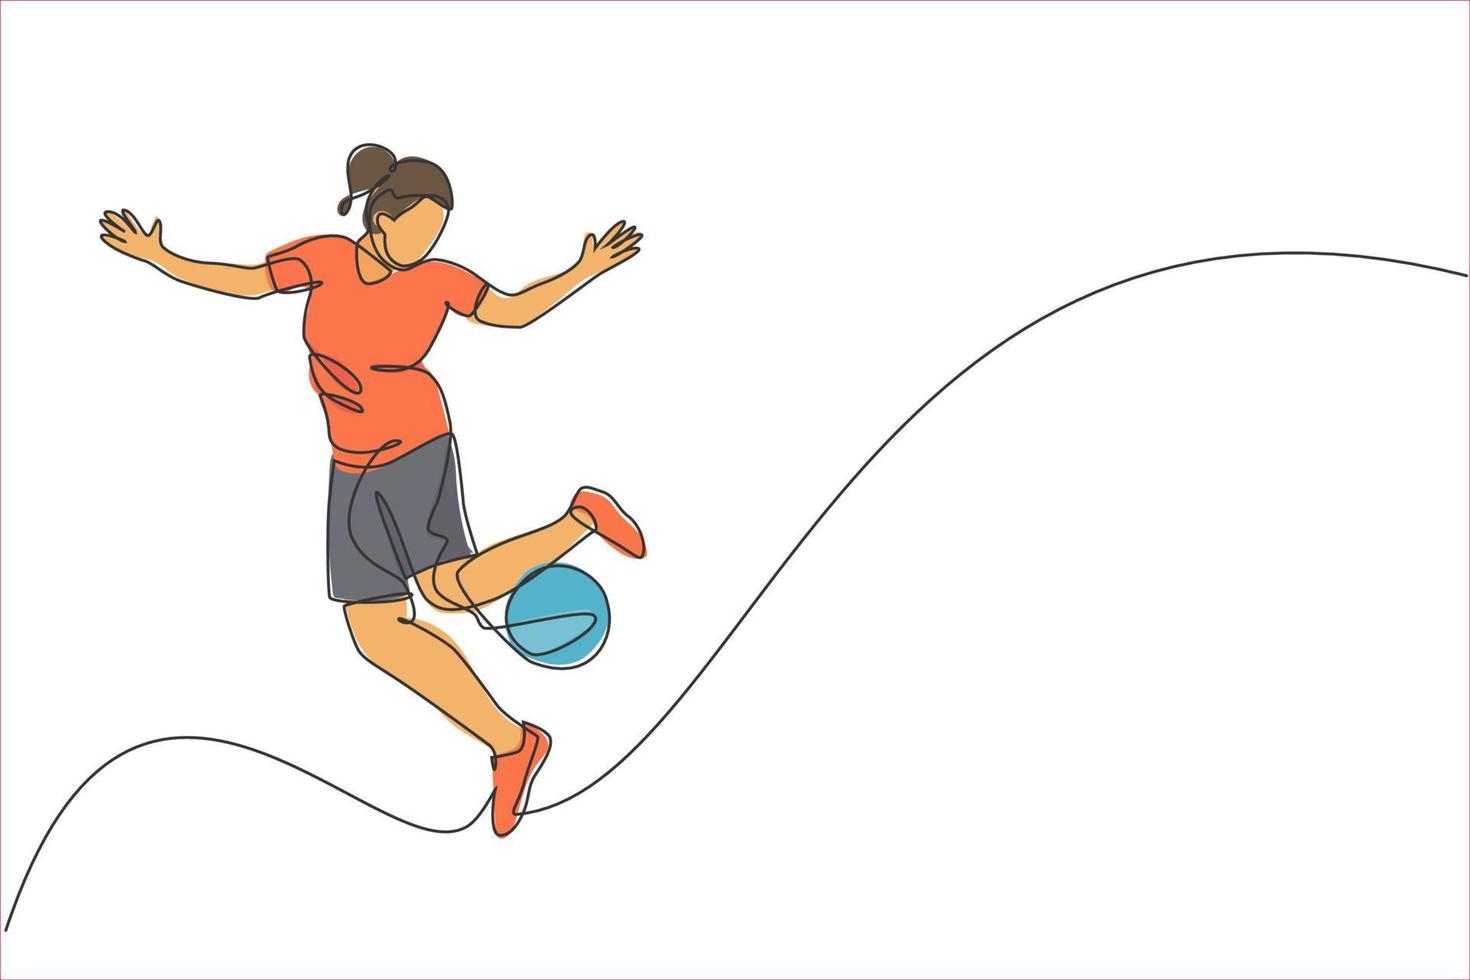 en enda linje ritning ung glad kvinna utföra fotboll freestyle, jonglera boll på stadens torg vektorillustration. fotboll freestyler sport koncept. modern kontinuerlig linjeritningsdesign vektor